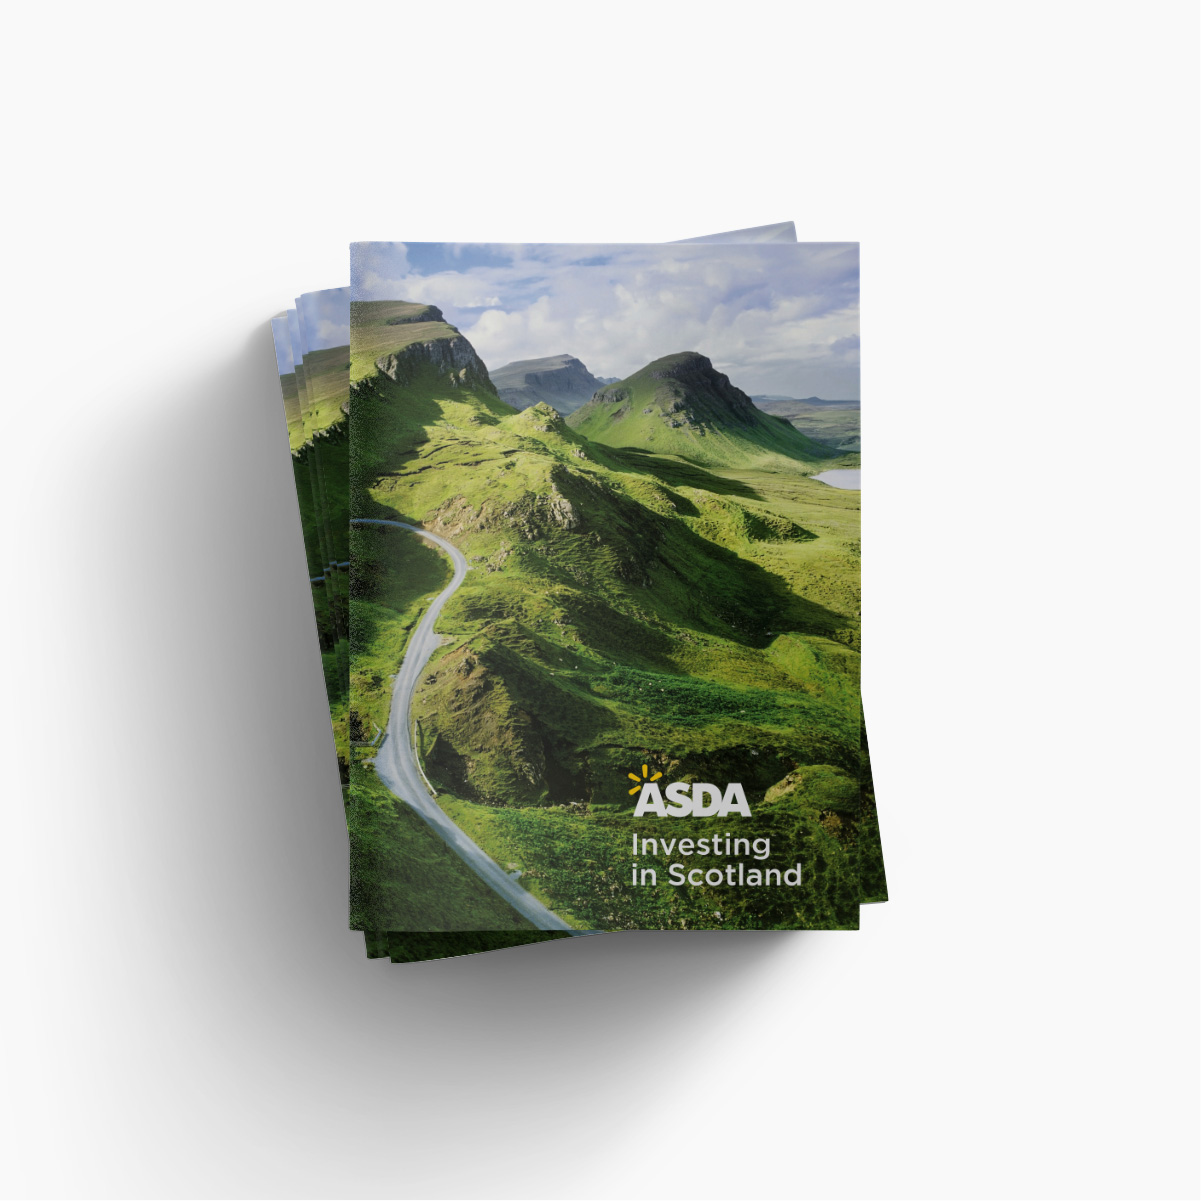 Asda Investing In Scotland boolet design